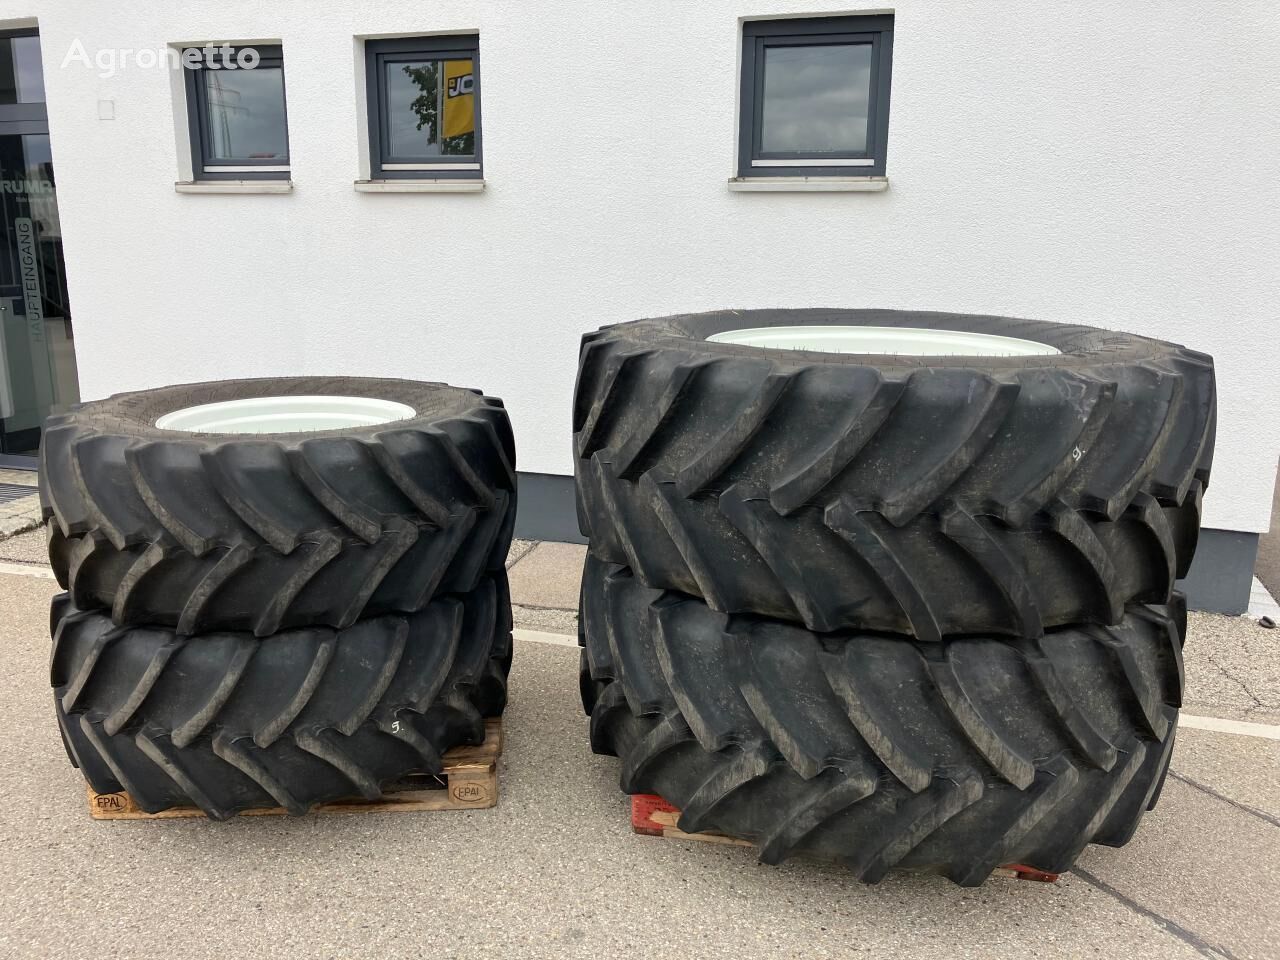 pneu de tracteur 540/65R28 und 650/65R38